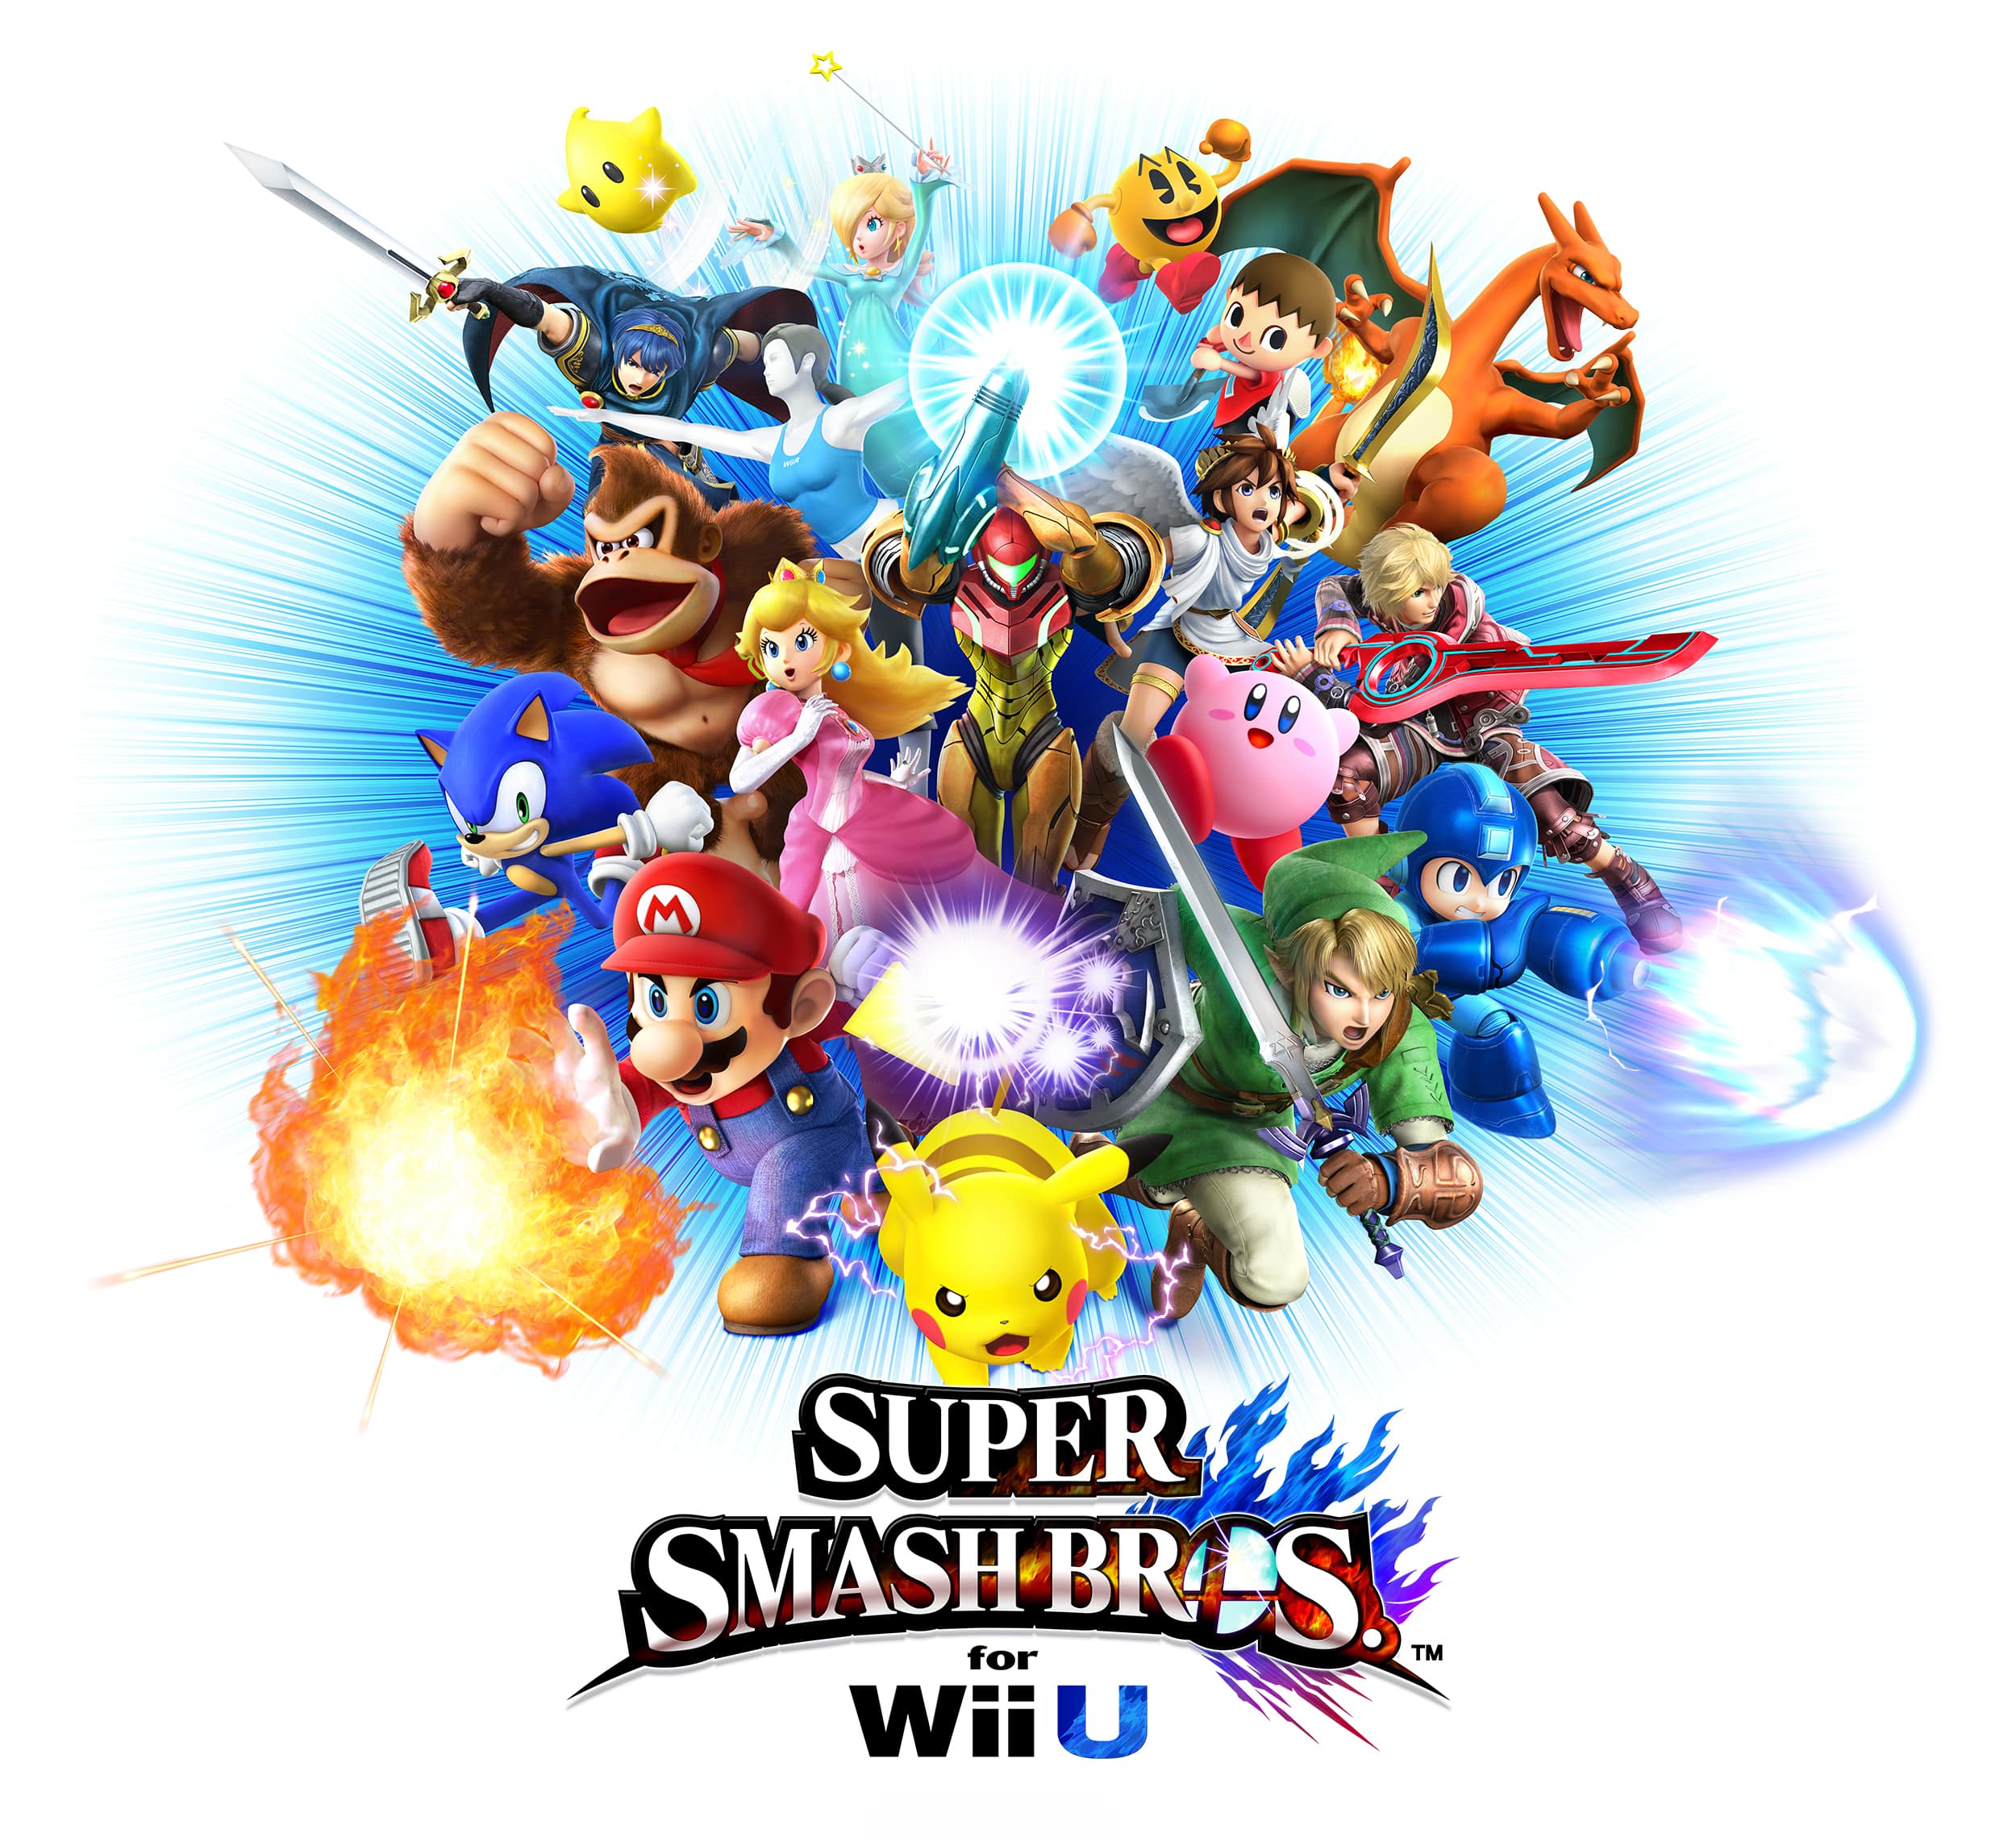 Super Smash Bros Wii U boxart